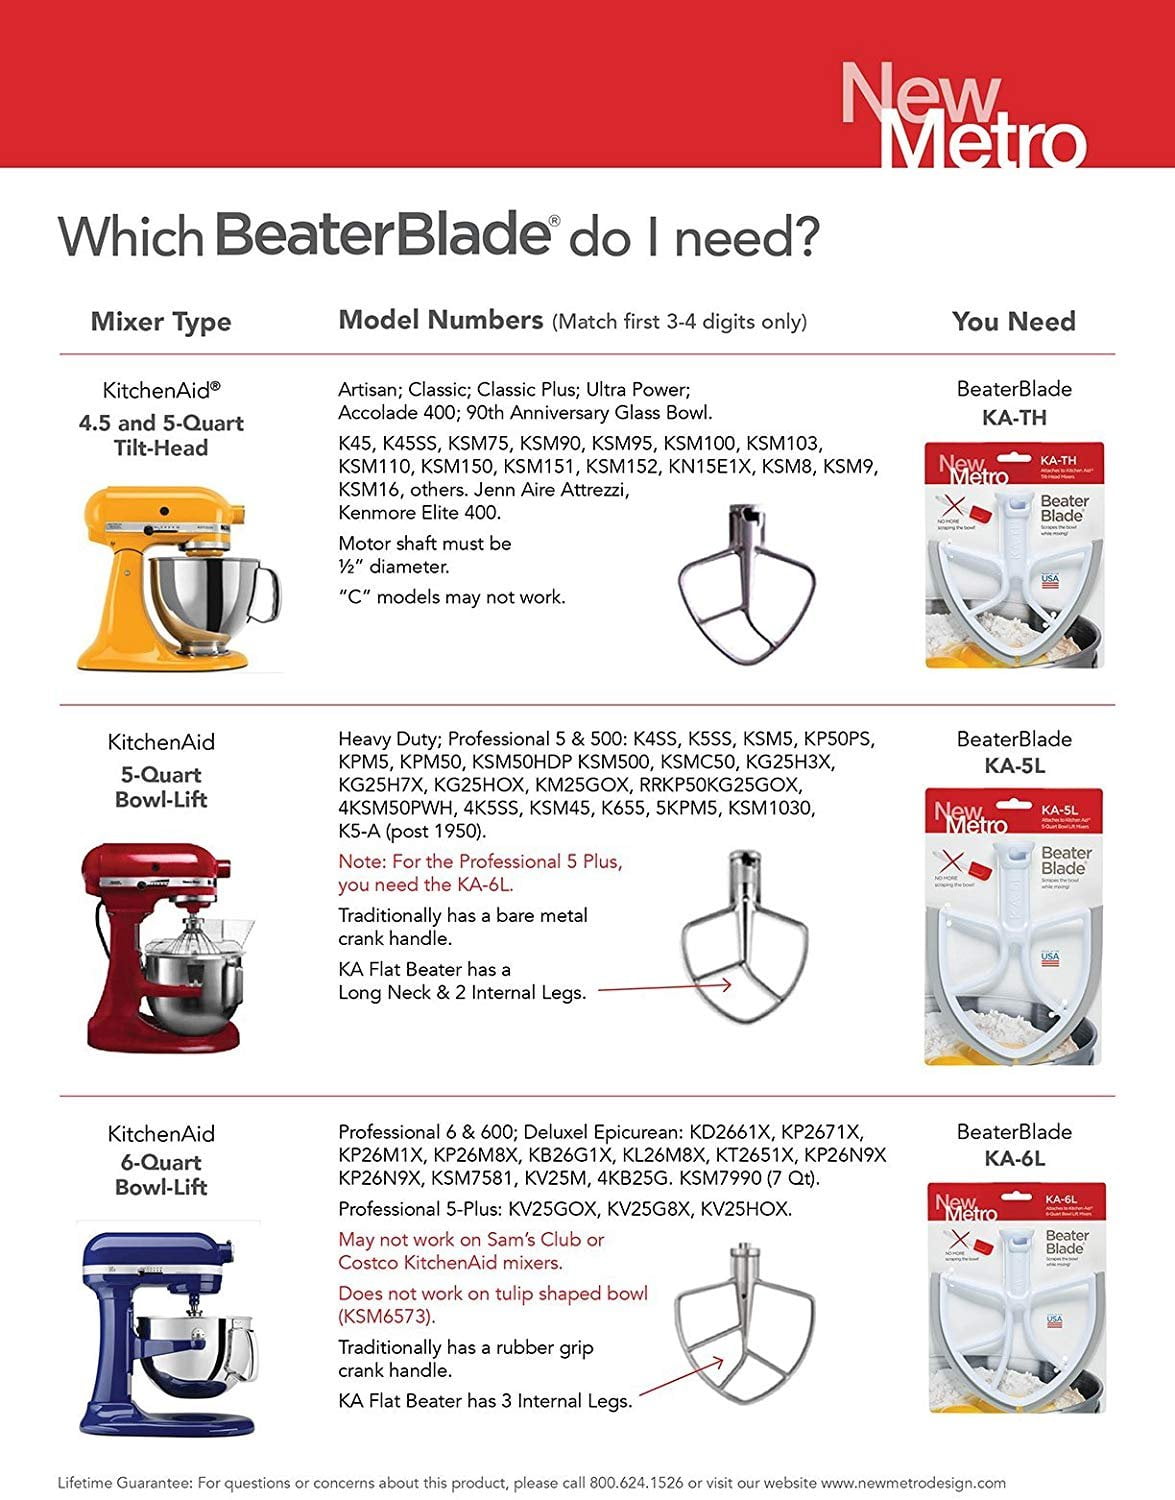 Newmetrodesign Home Beaterblade Fits KitchenAid 5-Quart Bowl Lift Mixers